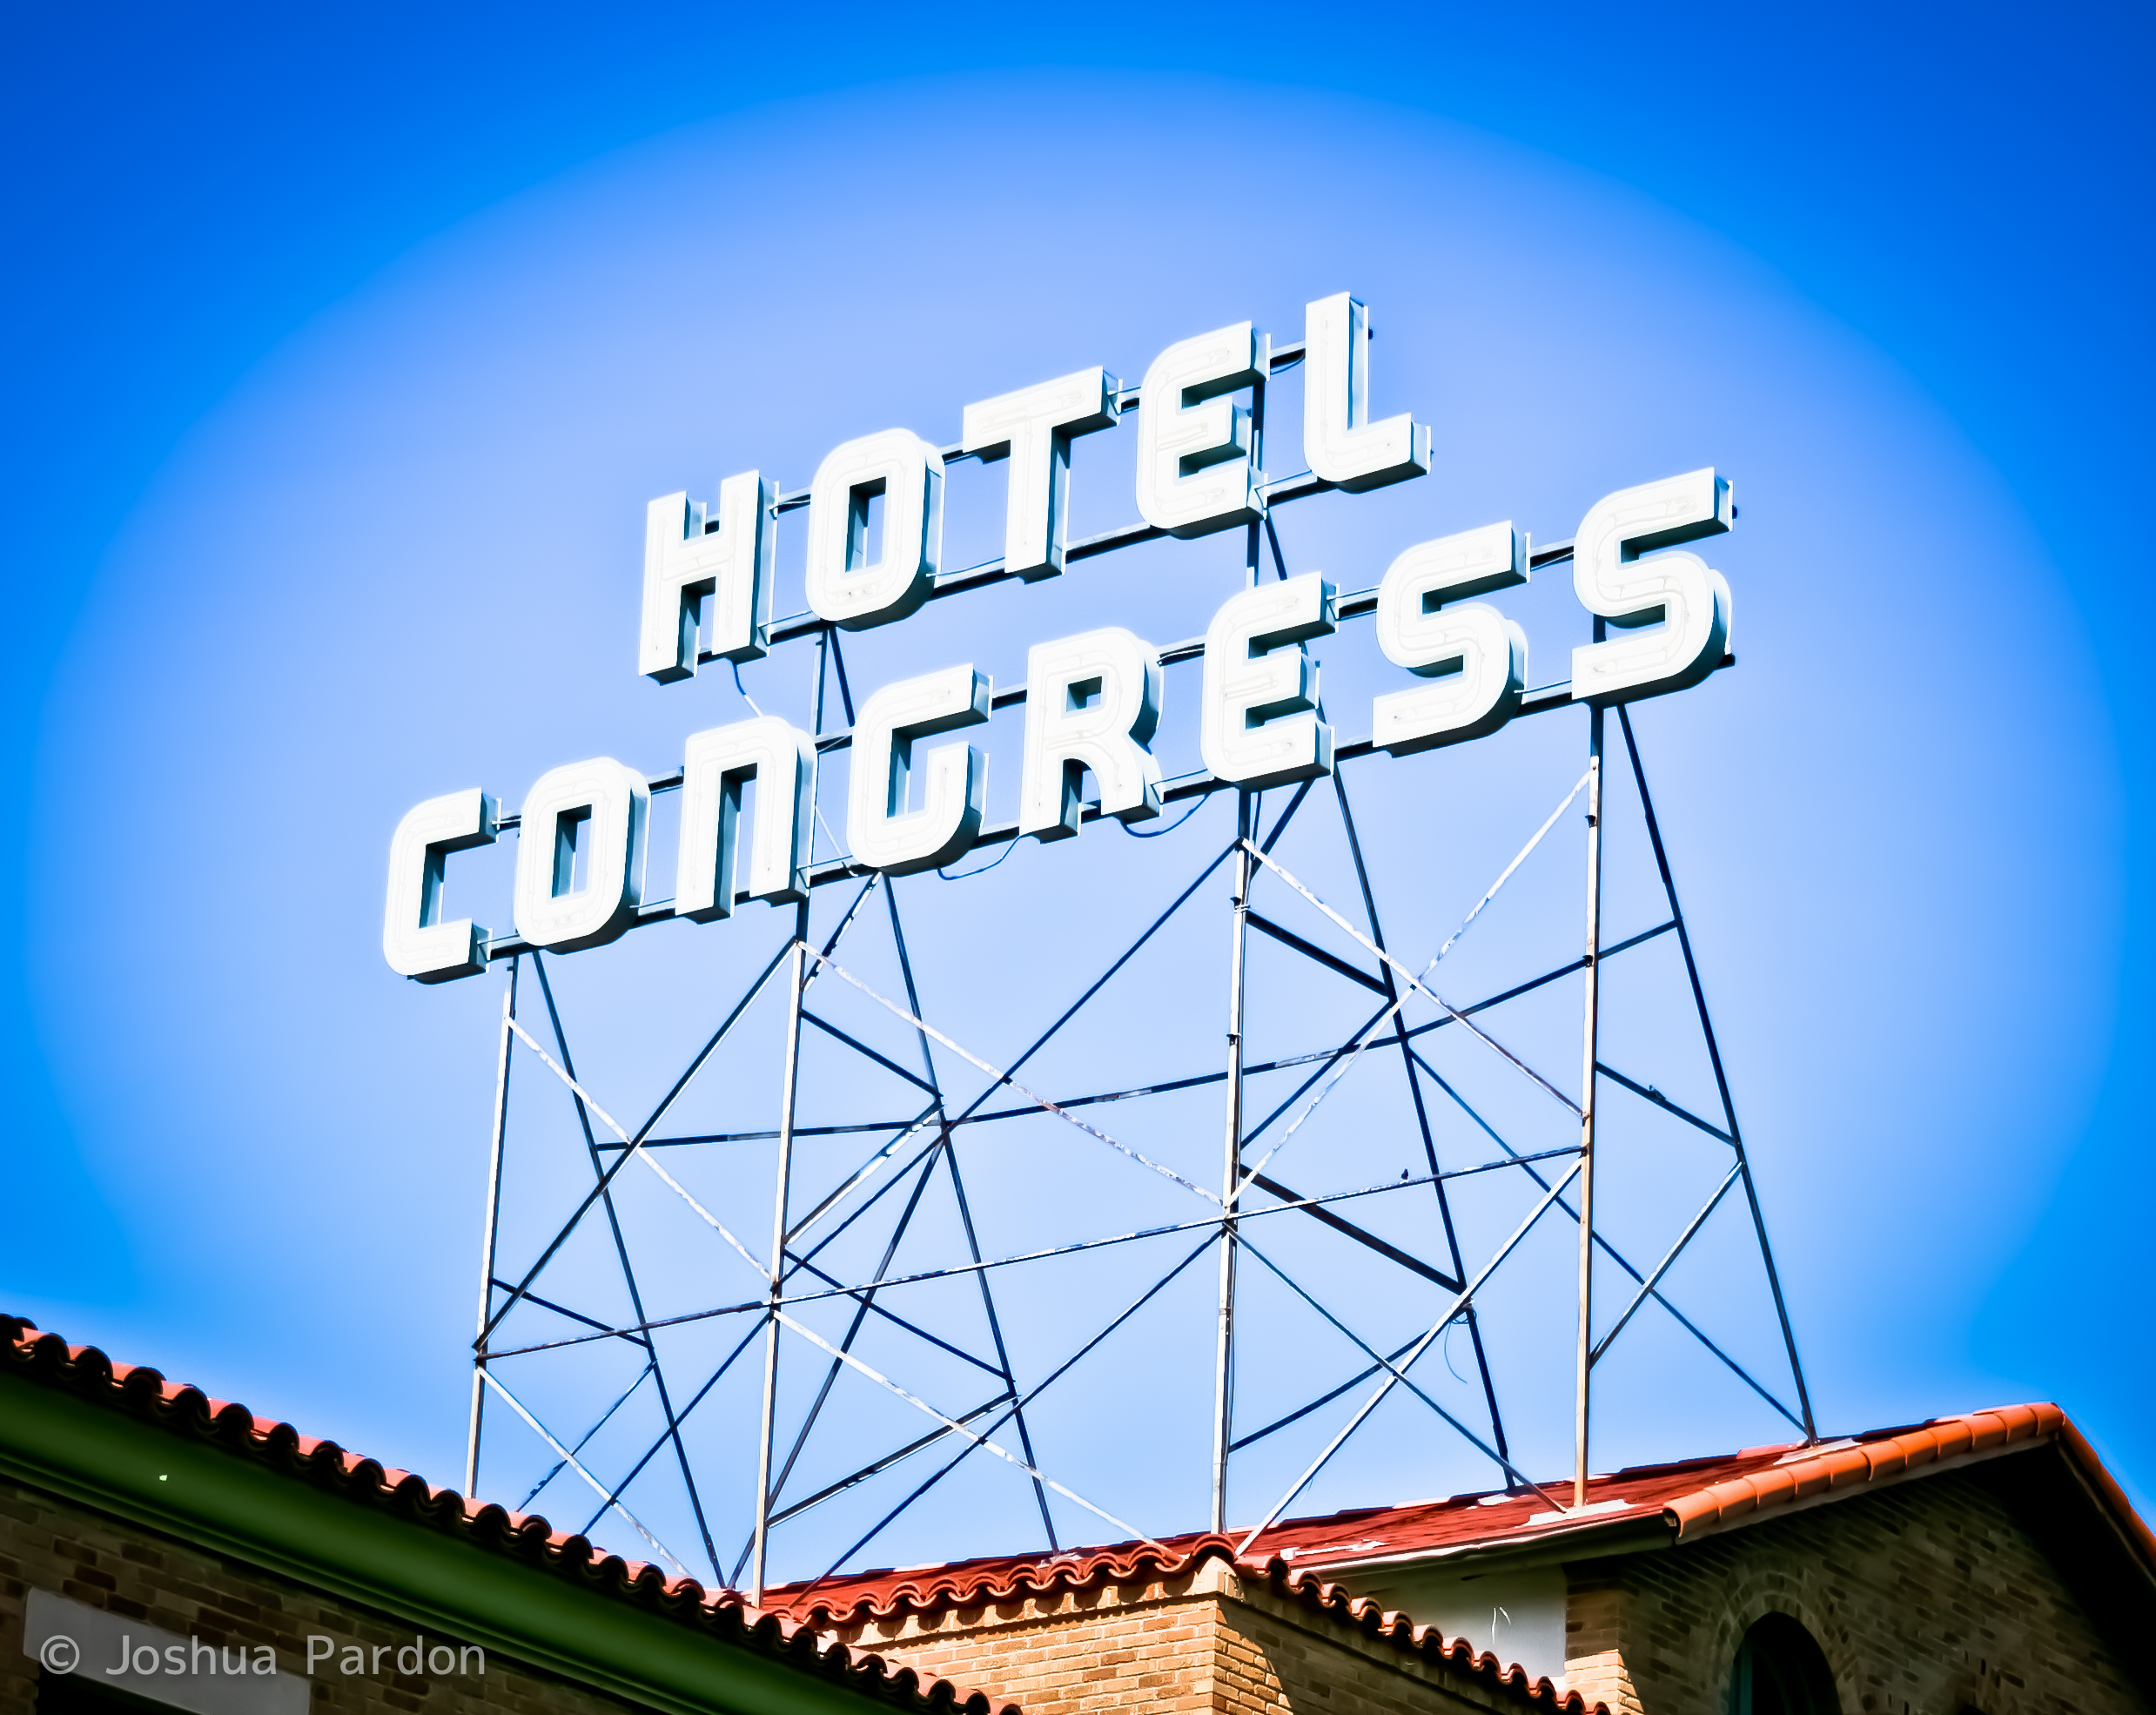 Hotel Congress